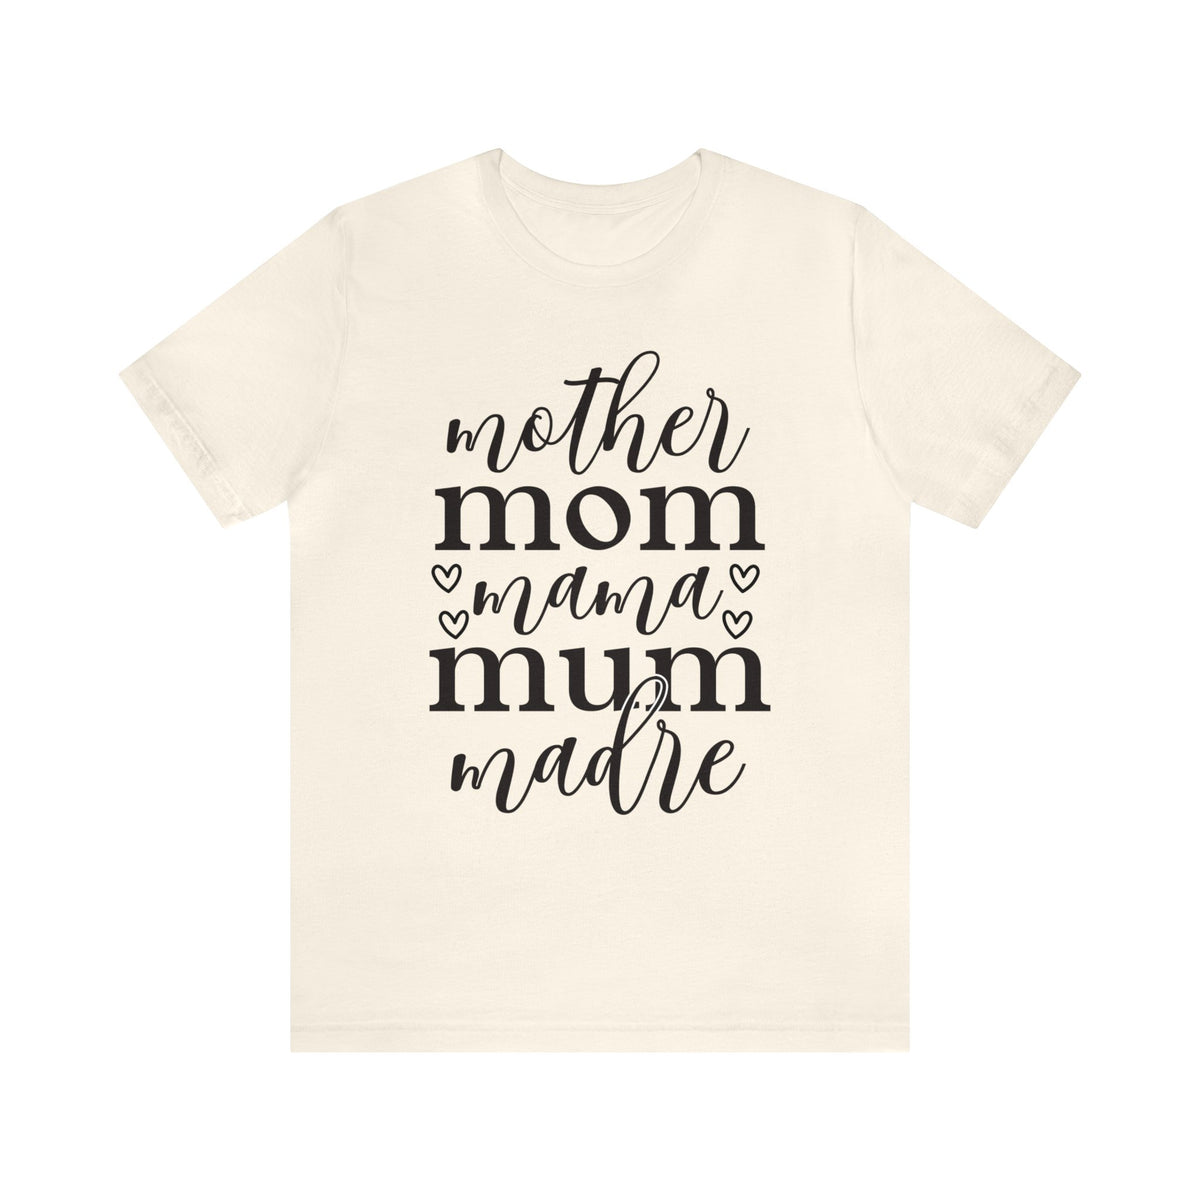 Cute Mom Shirt | Mother Mom Mama Madre Mum Shirt |  Funny Graphic T-shirt